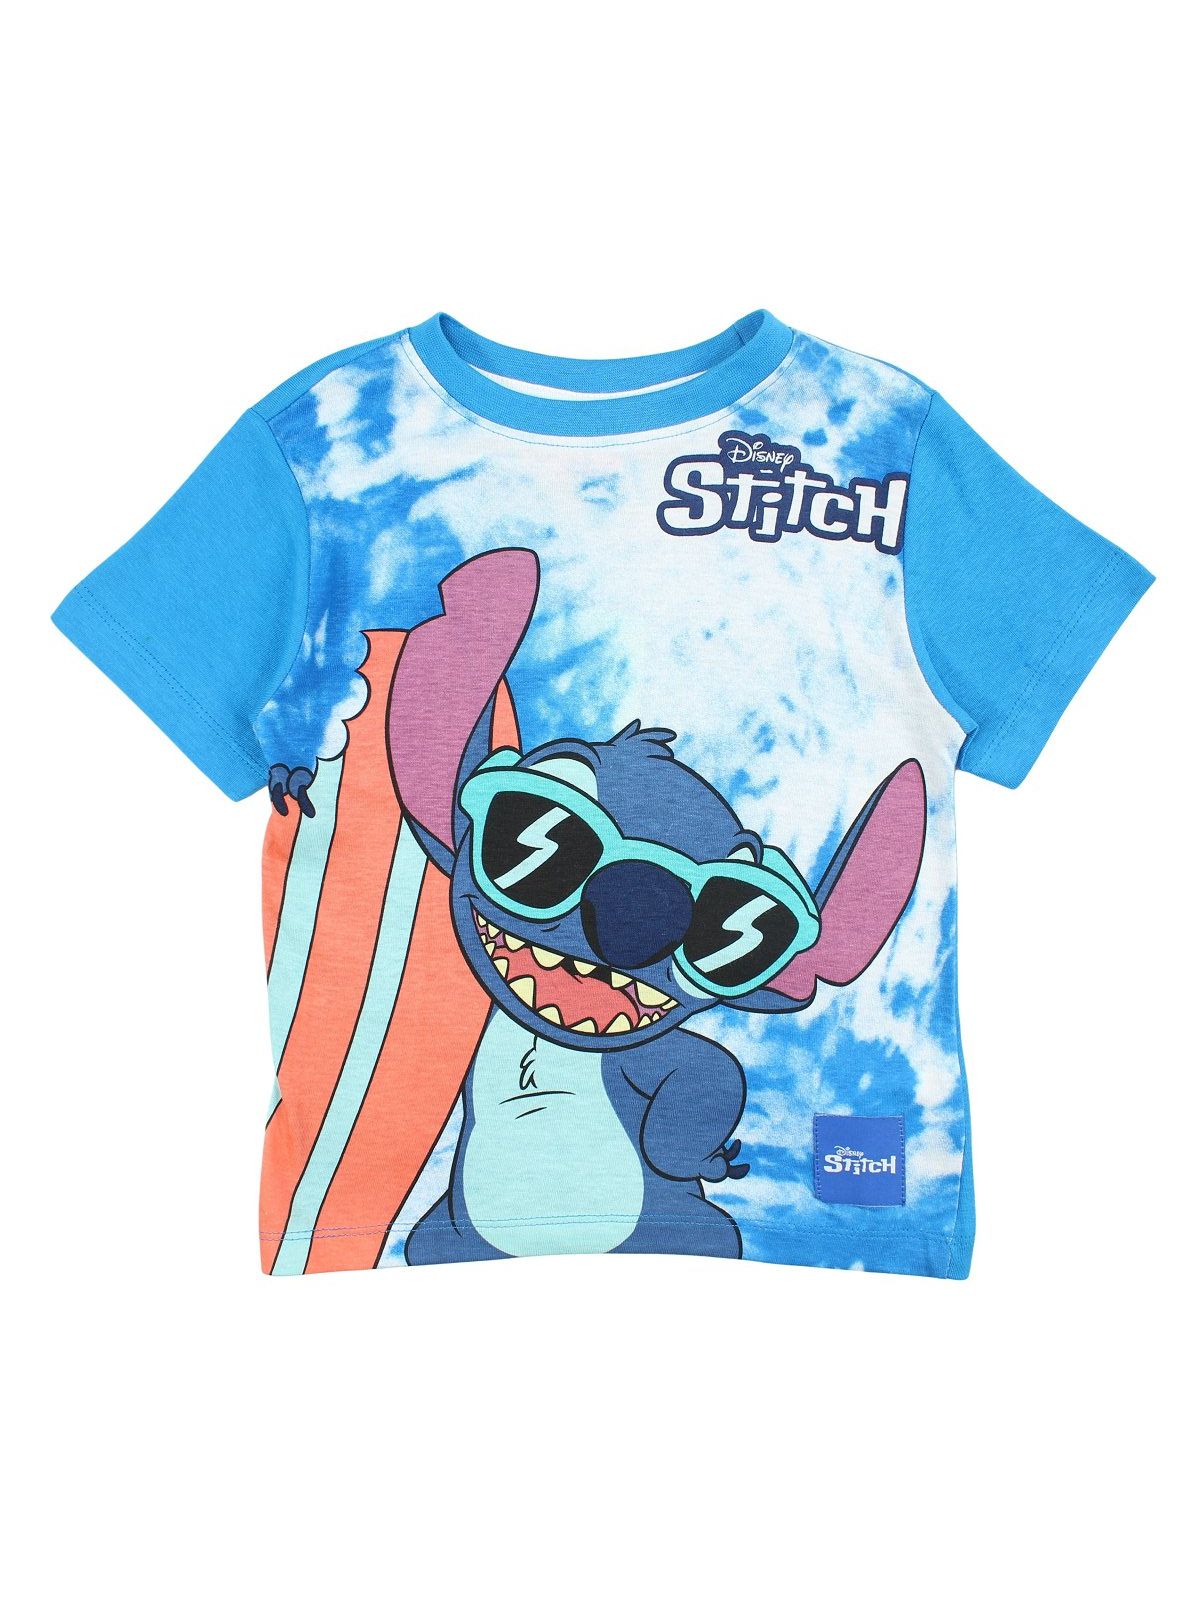 Lilo & Stitch t-shirt.